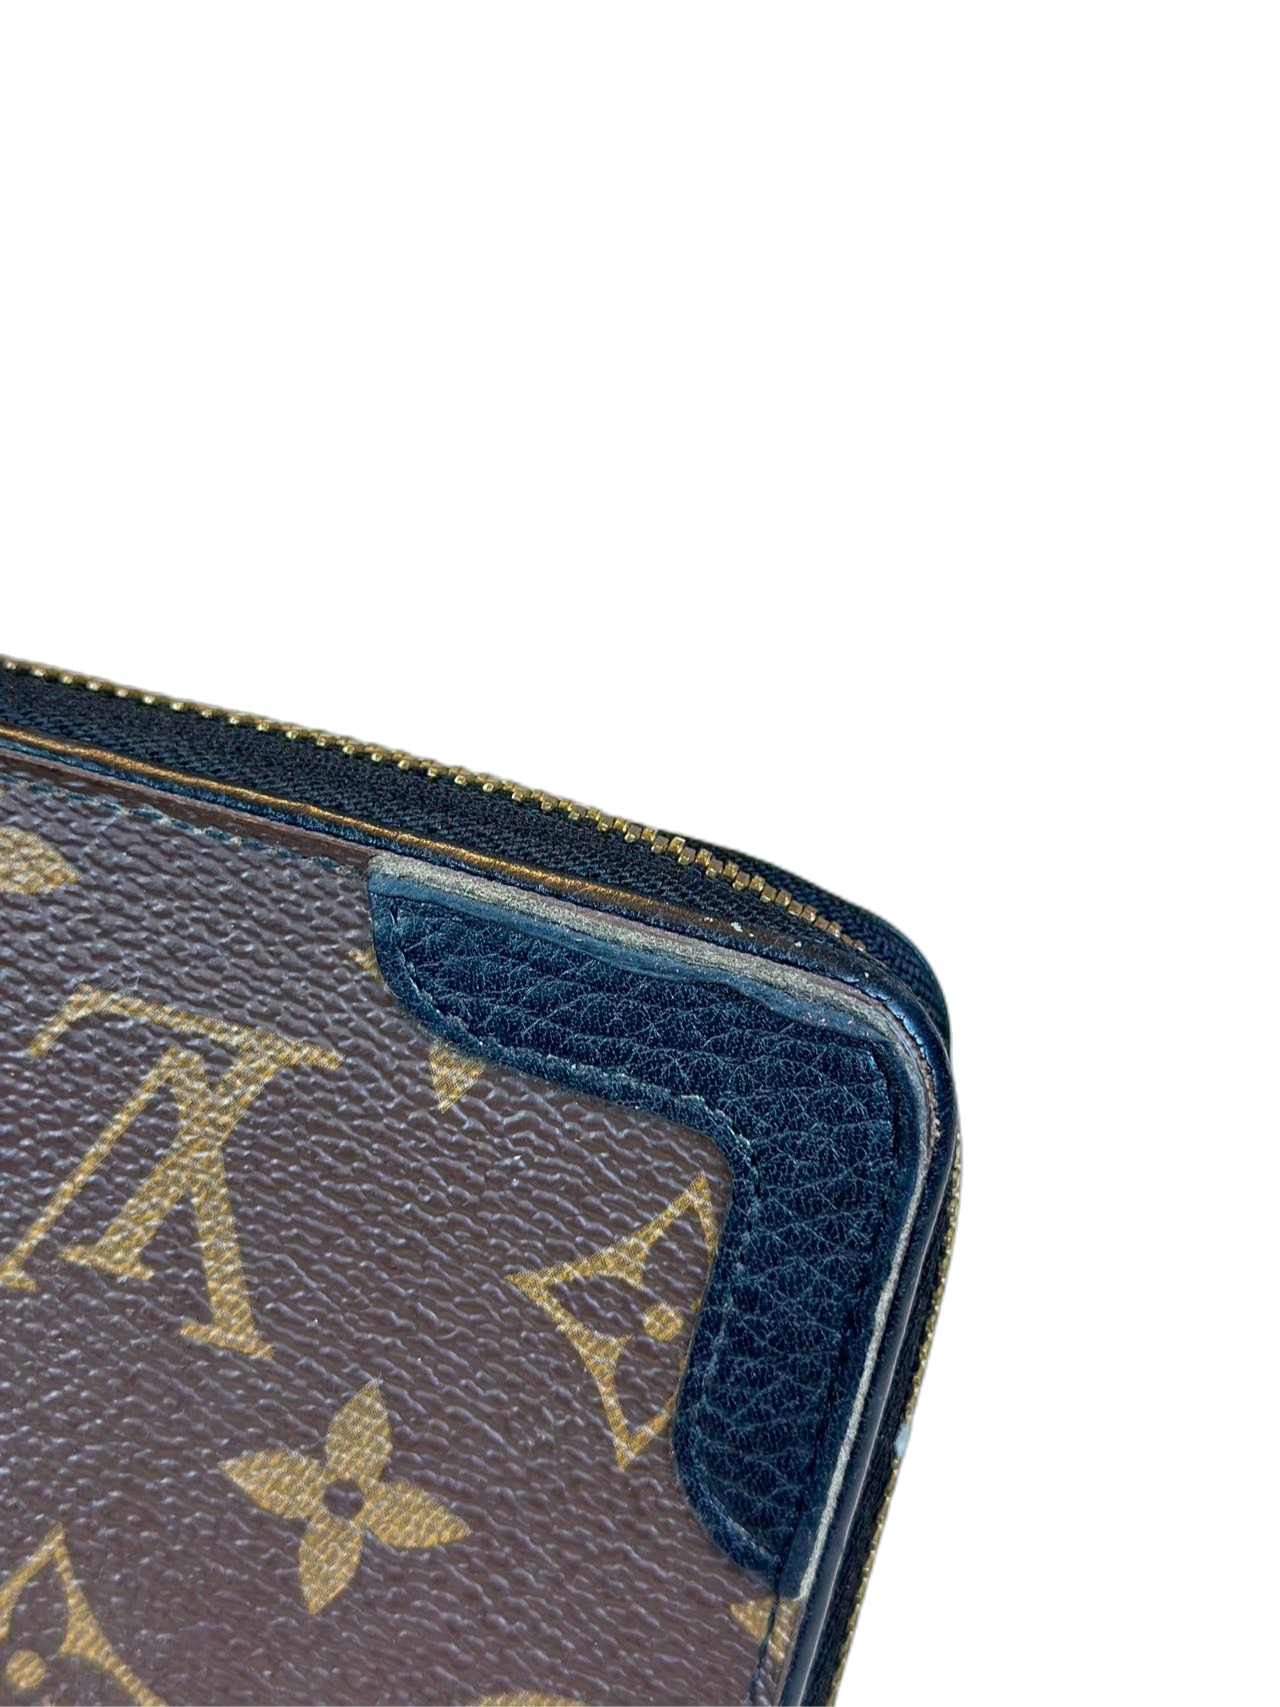 Preloved Louis Vuitton Monogram Canvas Leather wallet